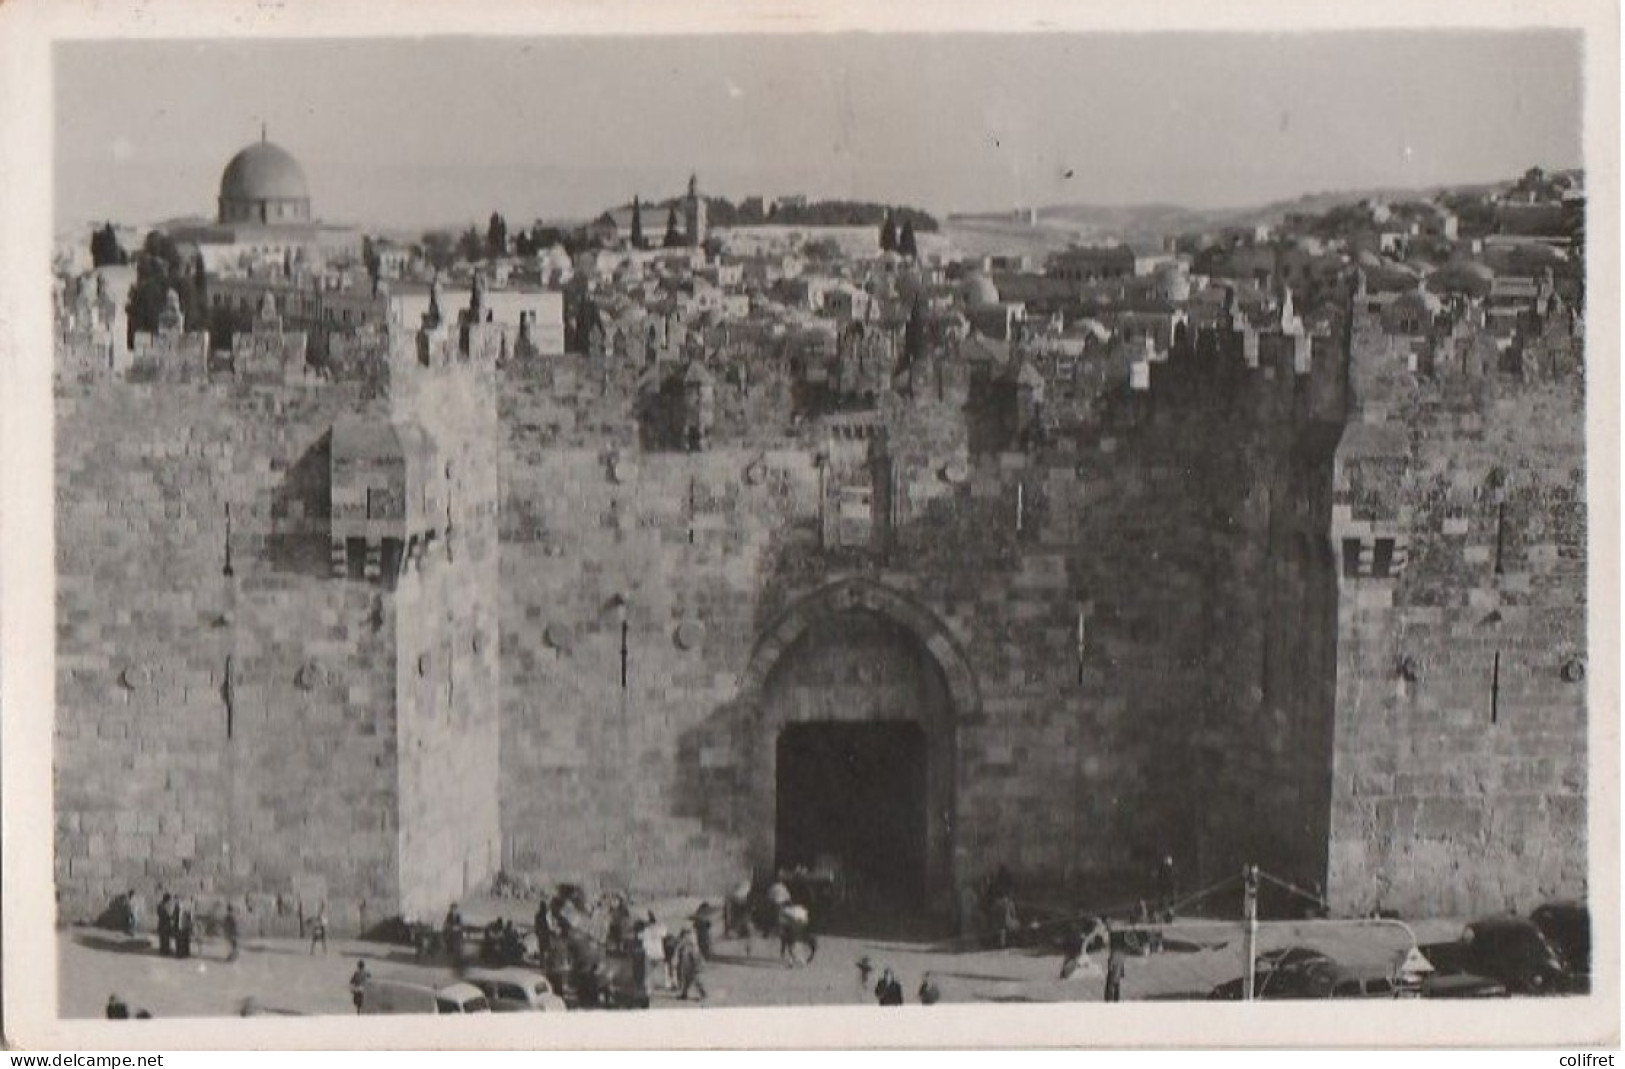 Jérusalem  -  Damascus Gate - Israel